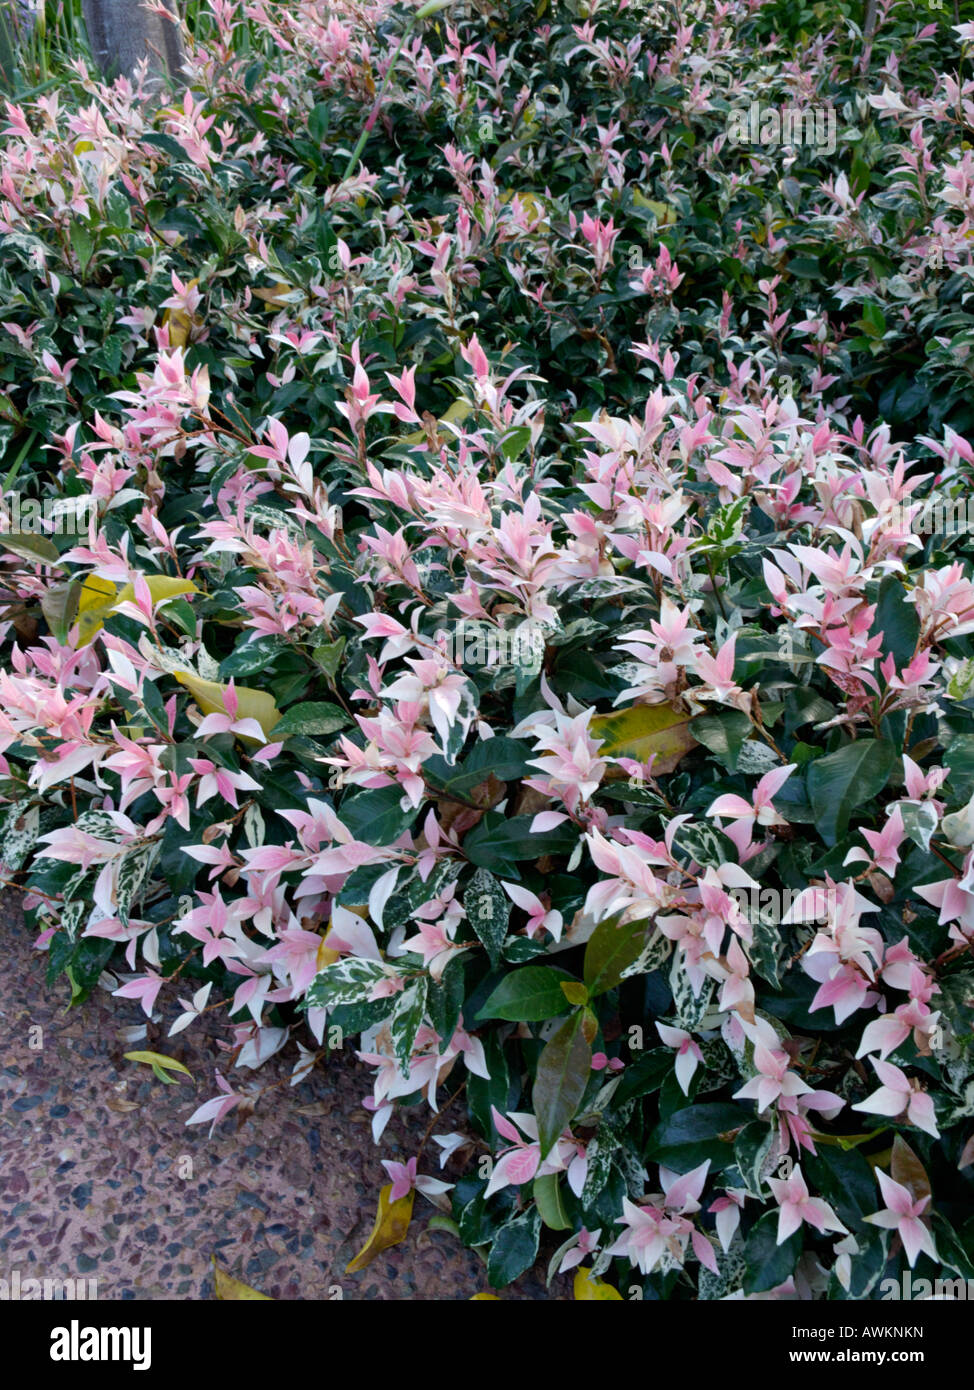 Star jasmine (Trachelospermum asiaticum 'Variegata') Stock Photo